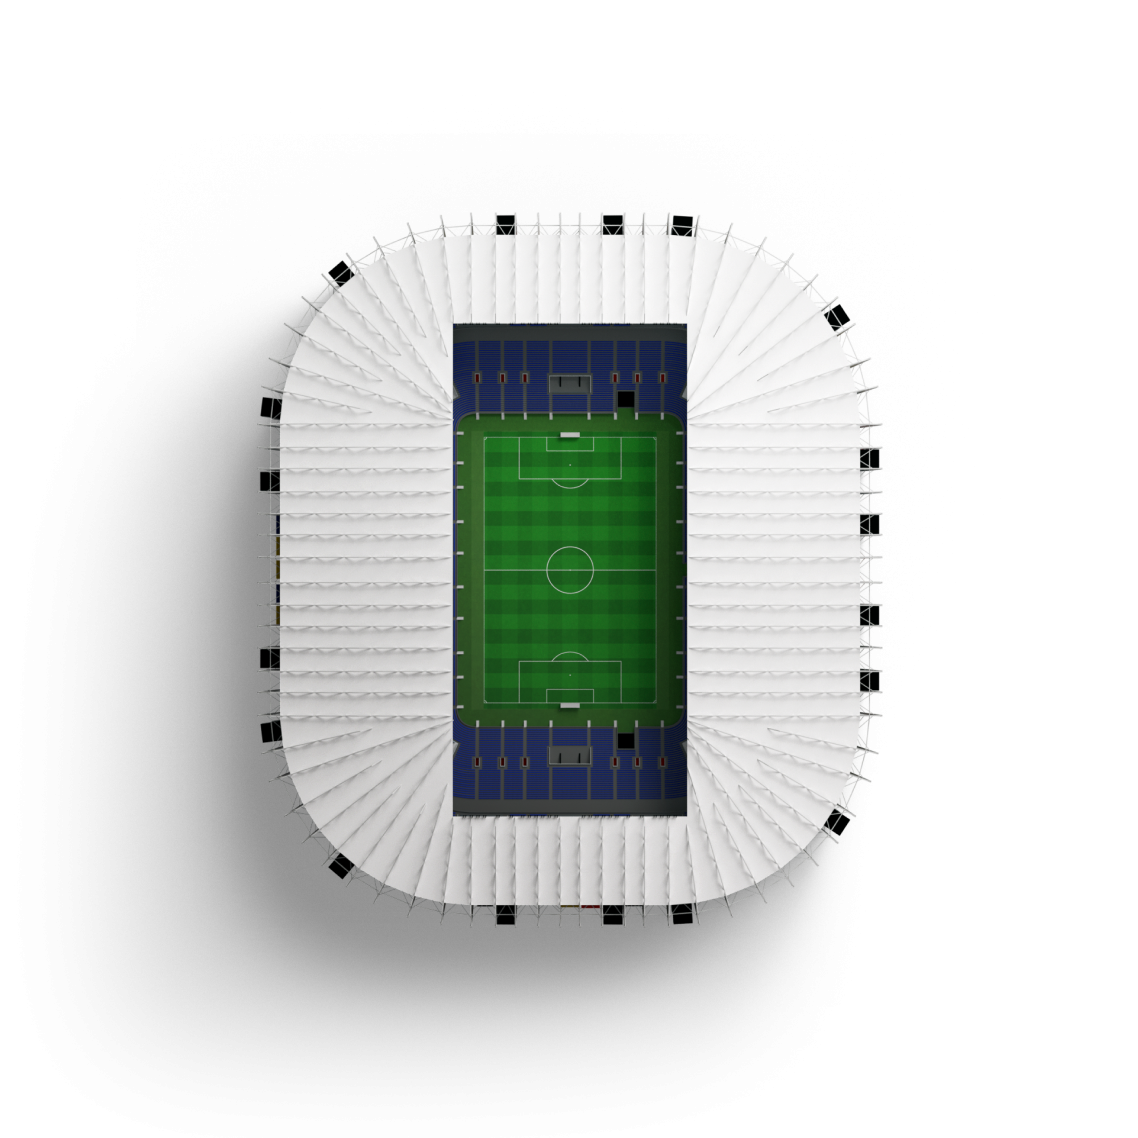 Stadium 974 Qatar 2022